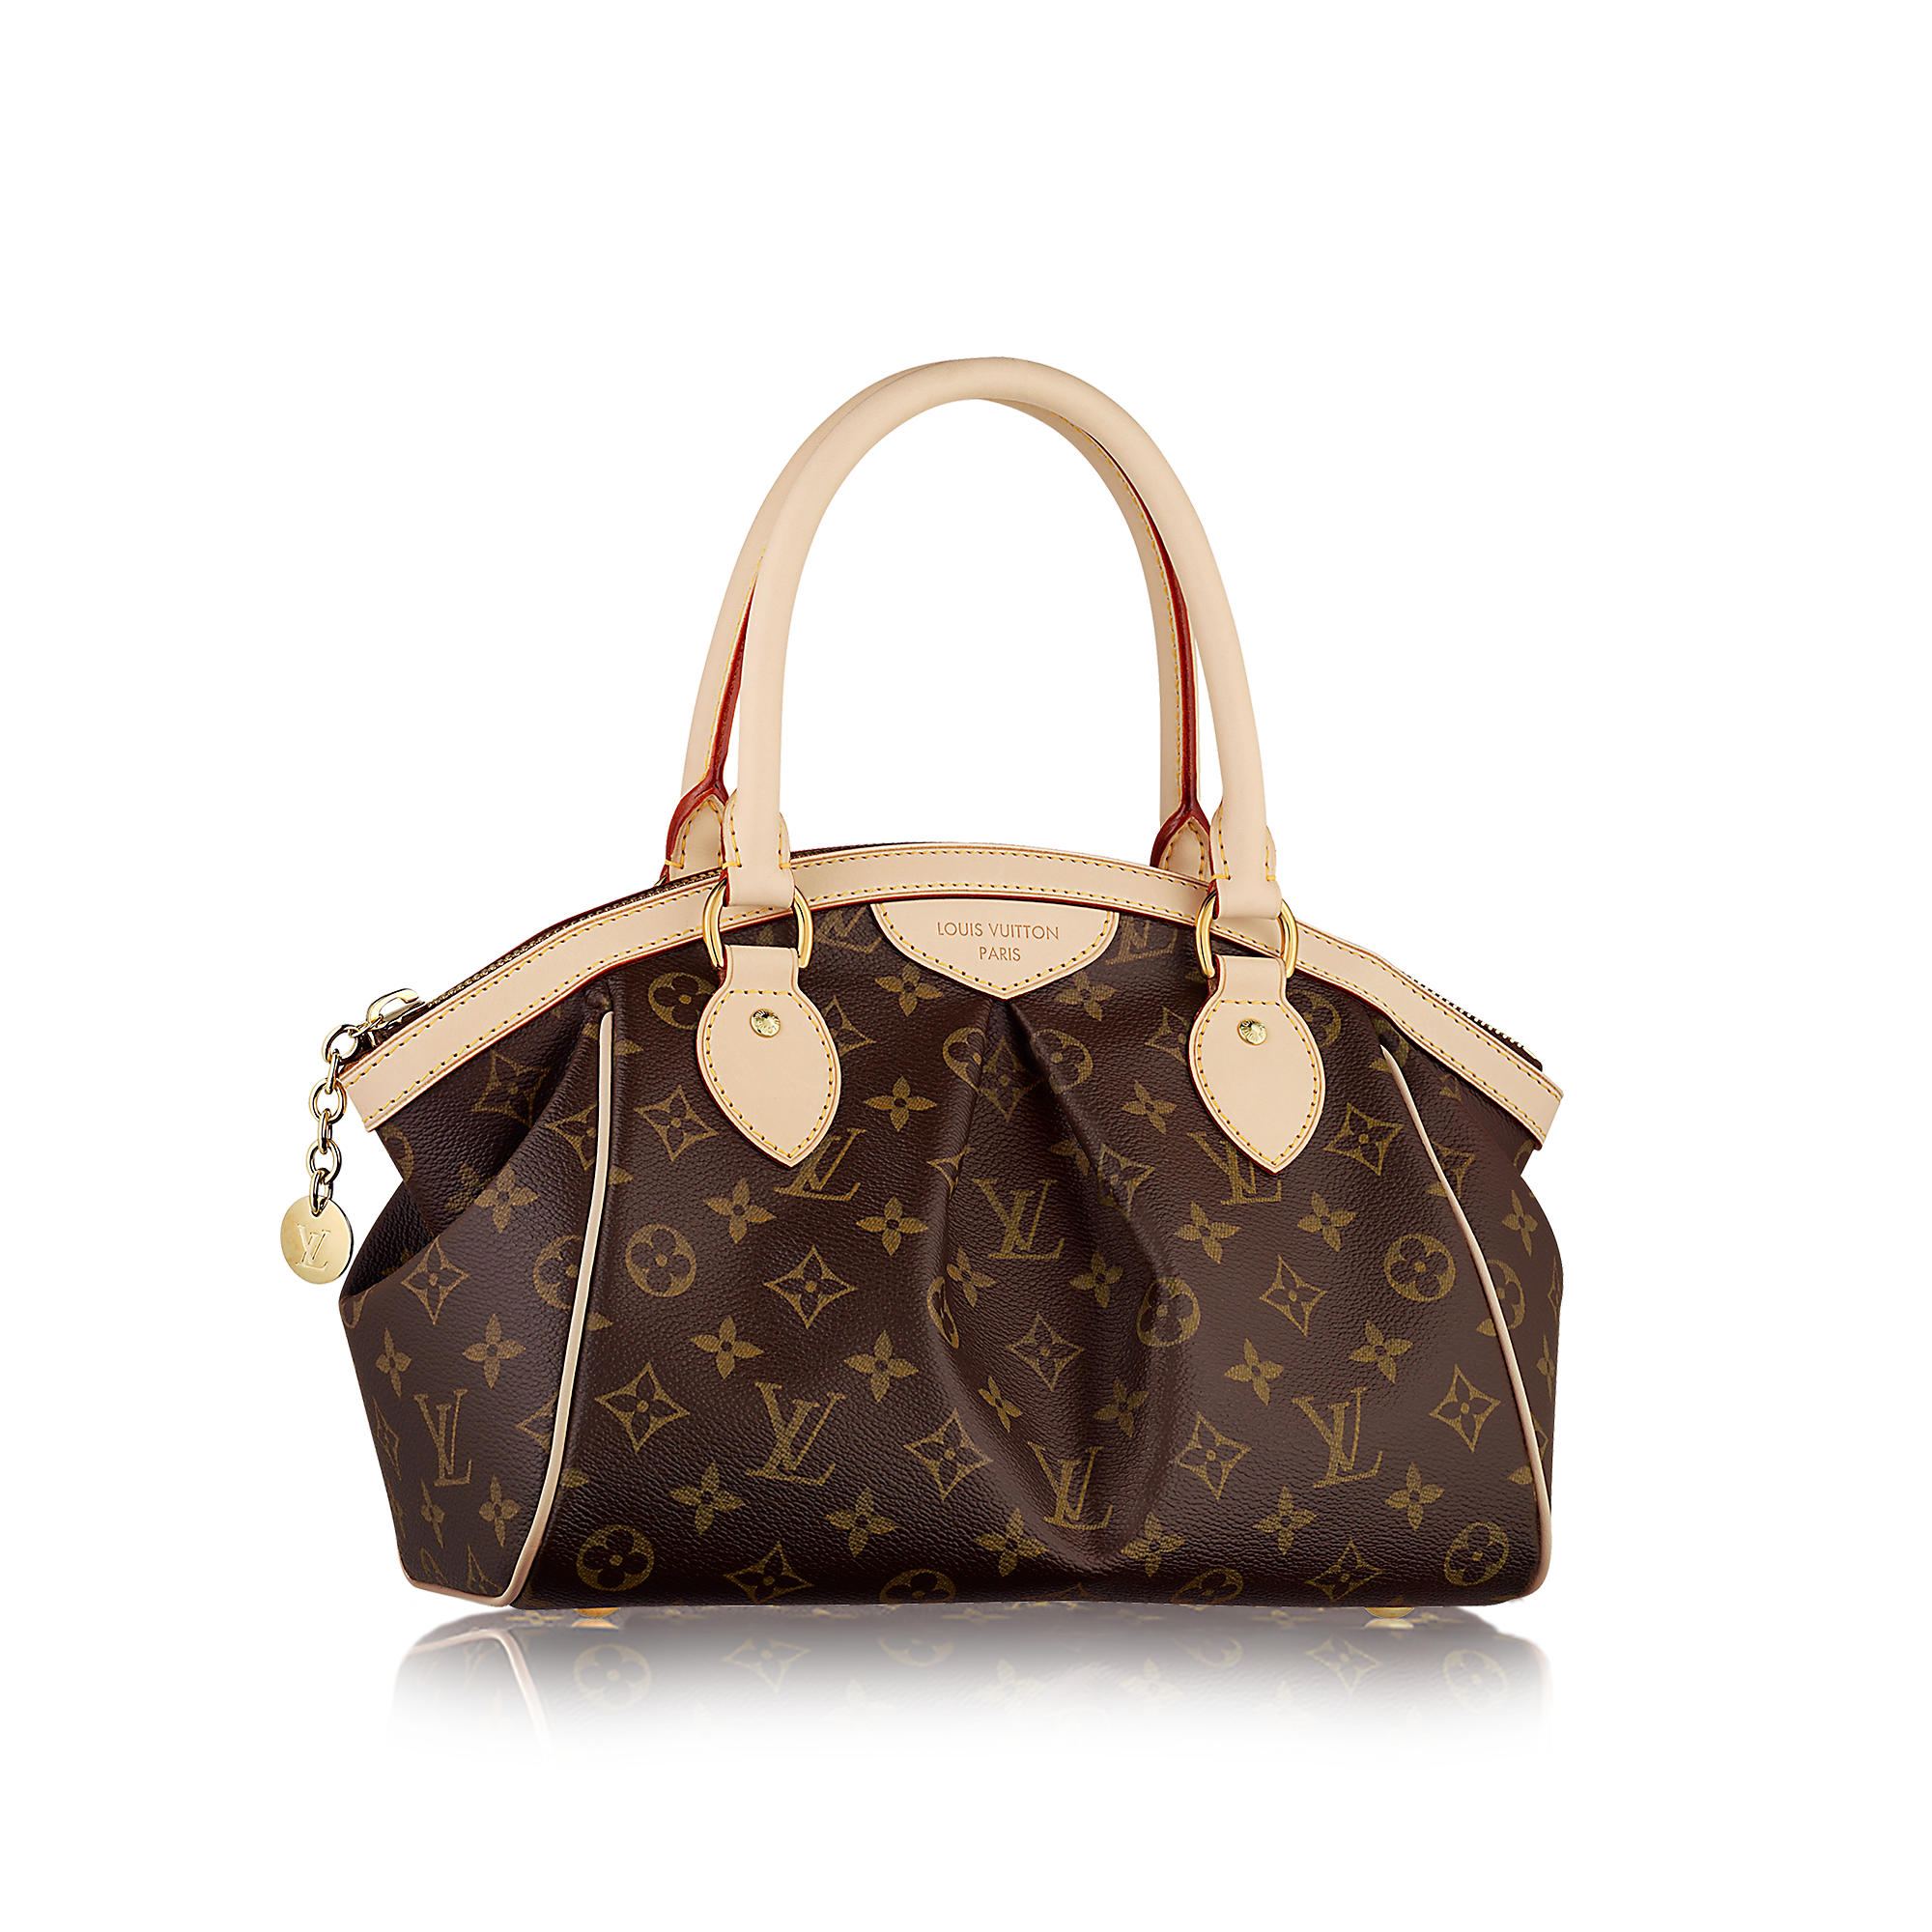 Almost new Auththenic LV Tivoli PM Louis Vutton Ladies Handbag | SingaporeMotherhood Forum